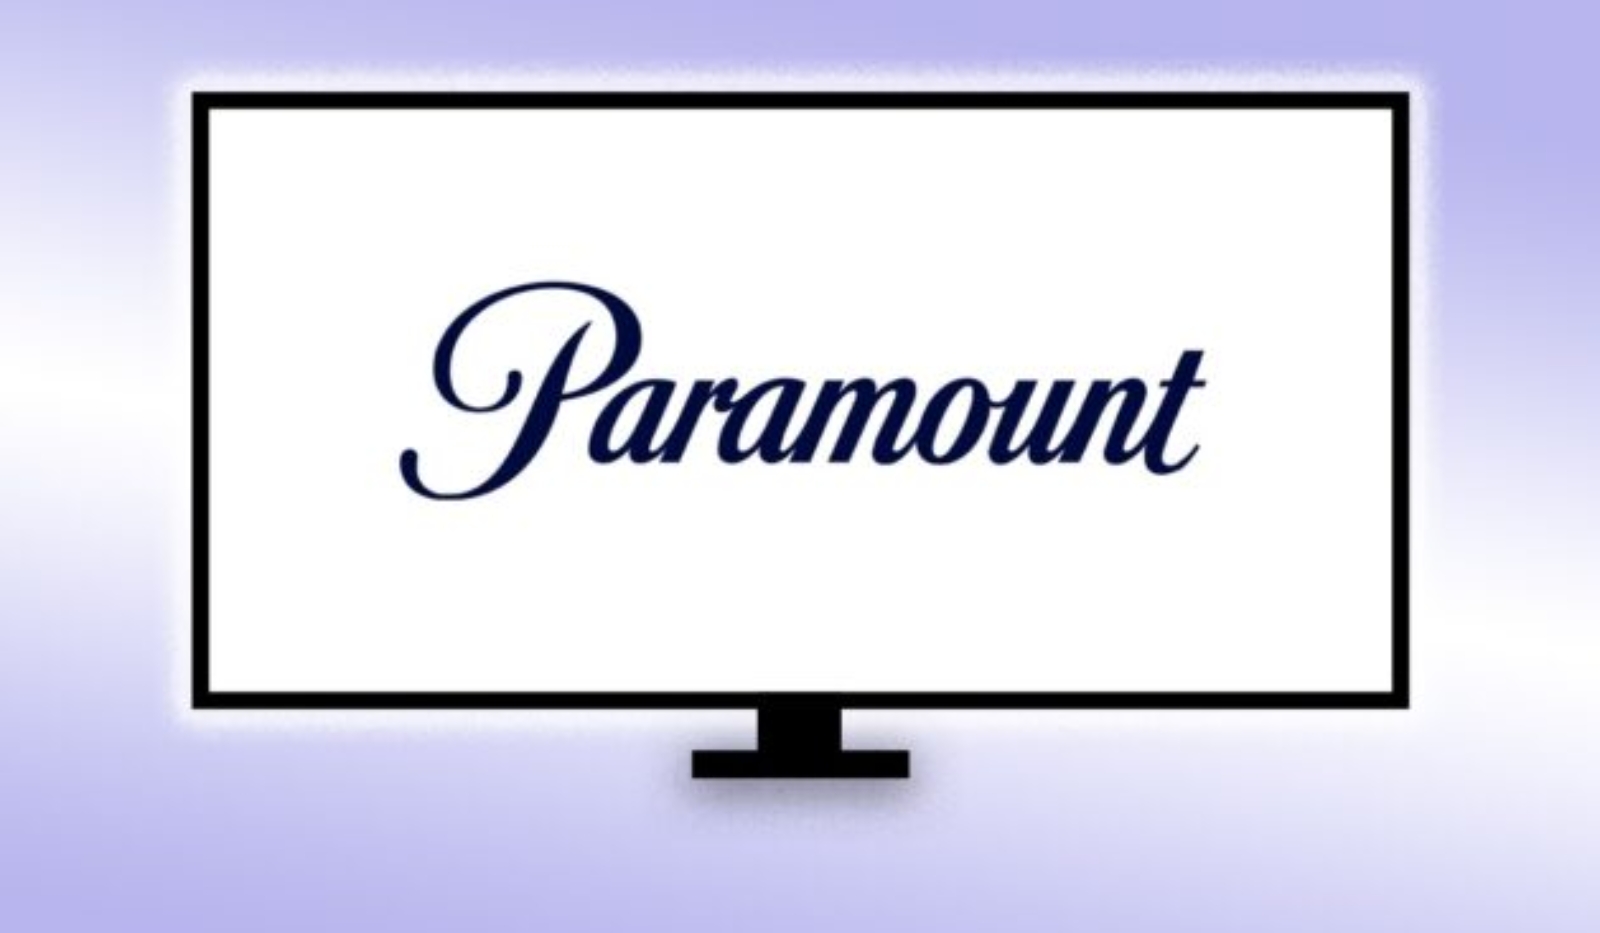 Paramount、Paramount+、顶级广告、大型跟踪器、CTV、连通电视、ad技术、广告商、大流程序广告、消费者经验实时编程、CTV管道编程、流水平台、净数据频管理、统一自由Wheel可扩展性、互操作性、集成性、SSP、供方平台、程序设计器、ad跟踪器、ad性能视频广告编程、独家标注、营销、广告Googlead管理员、ad购买程序员、ad销售平台、EyeQ直接集成